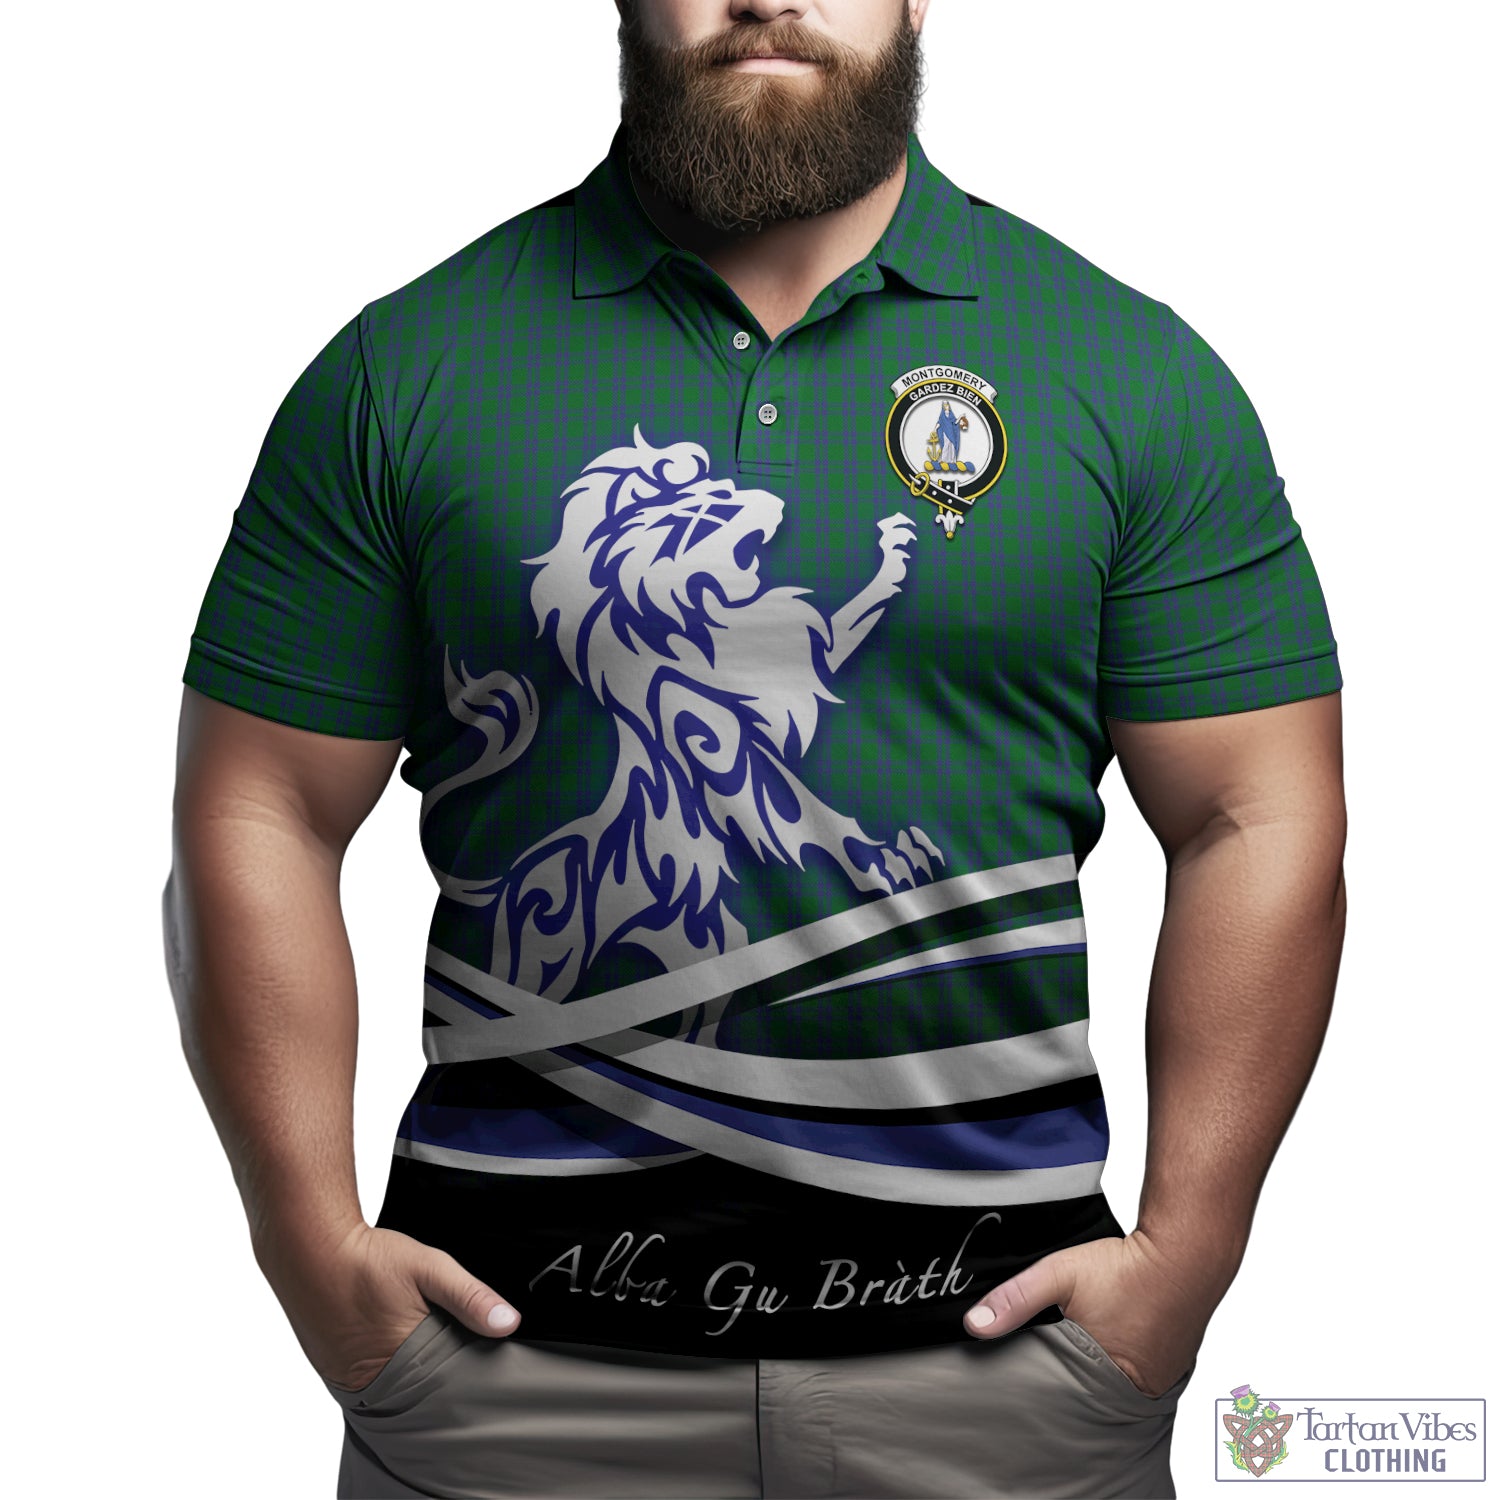 montgomery-tartan-polo-shirt-with-alba-gu-brath-regal-lion-emblem